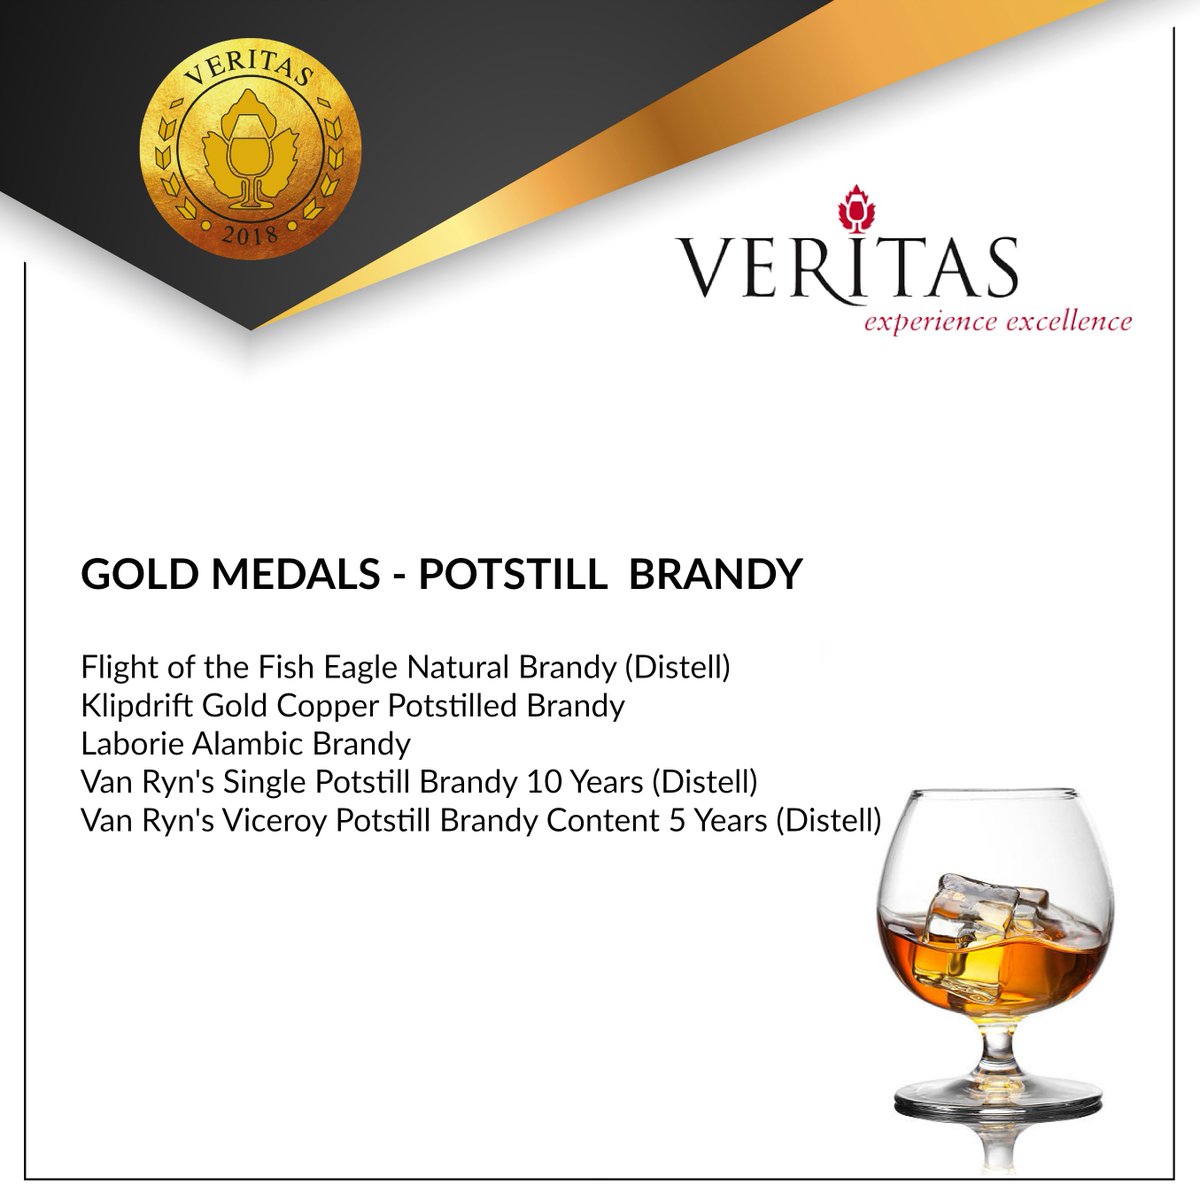 Veritas Awards On Twitter Veritas2018 Gold Medal Winners